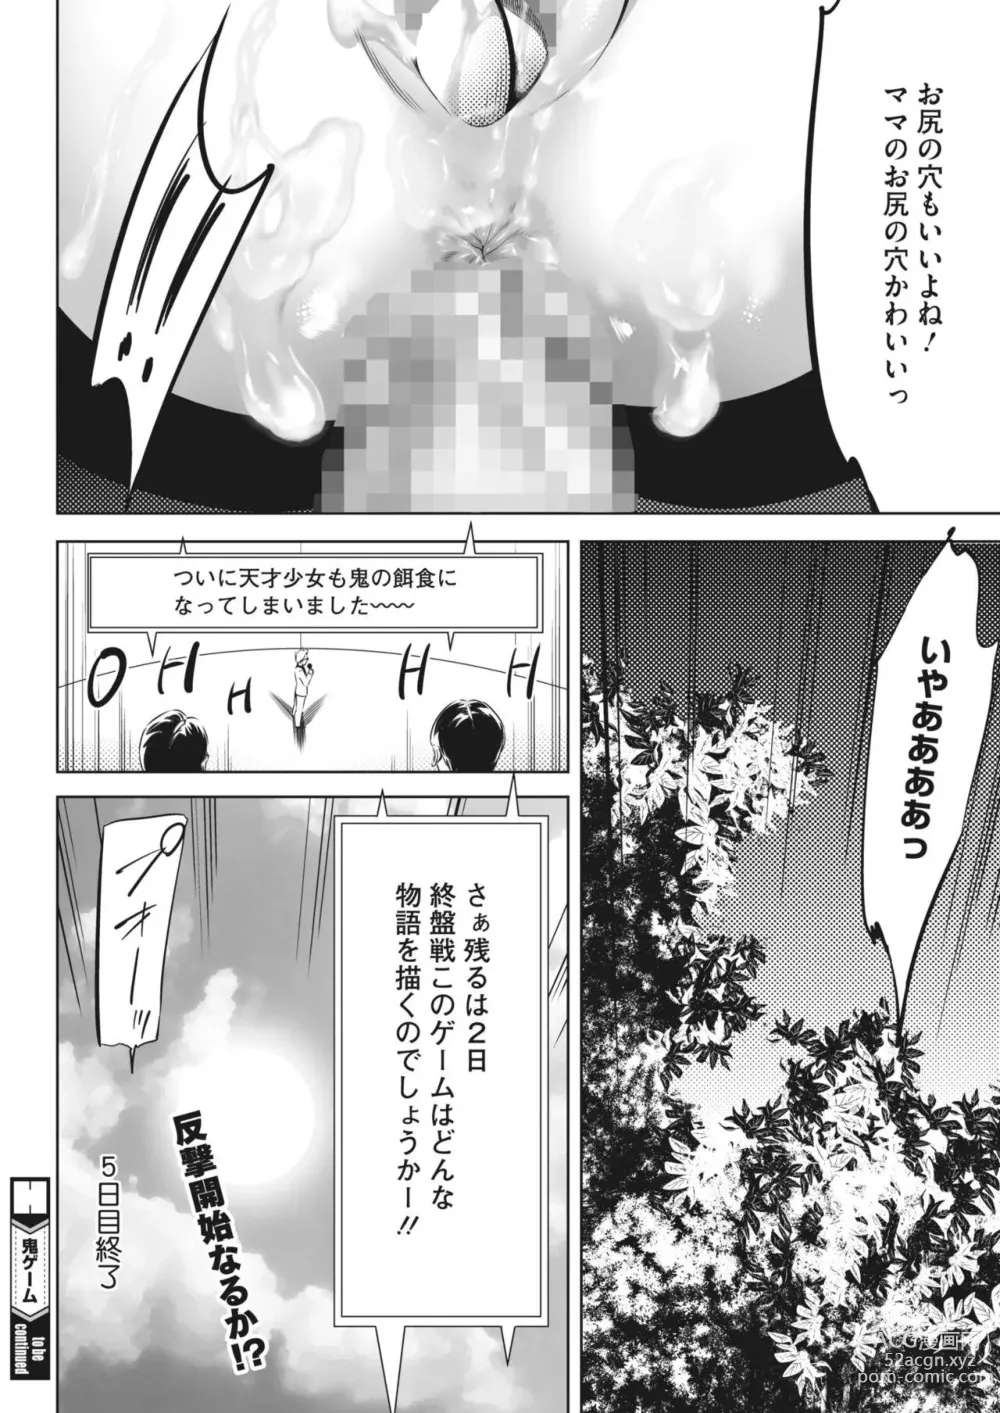 Page 30 of manga Oni Game Ch.7